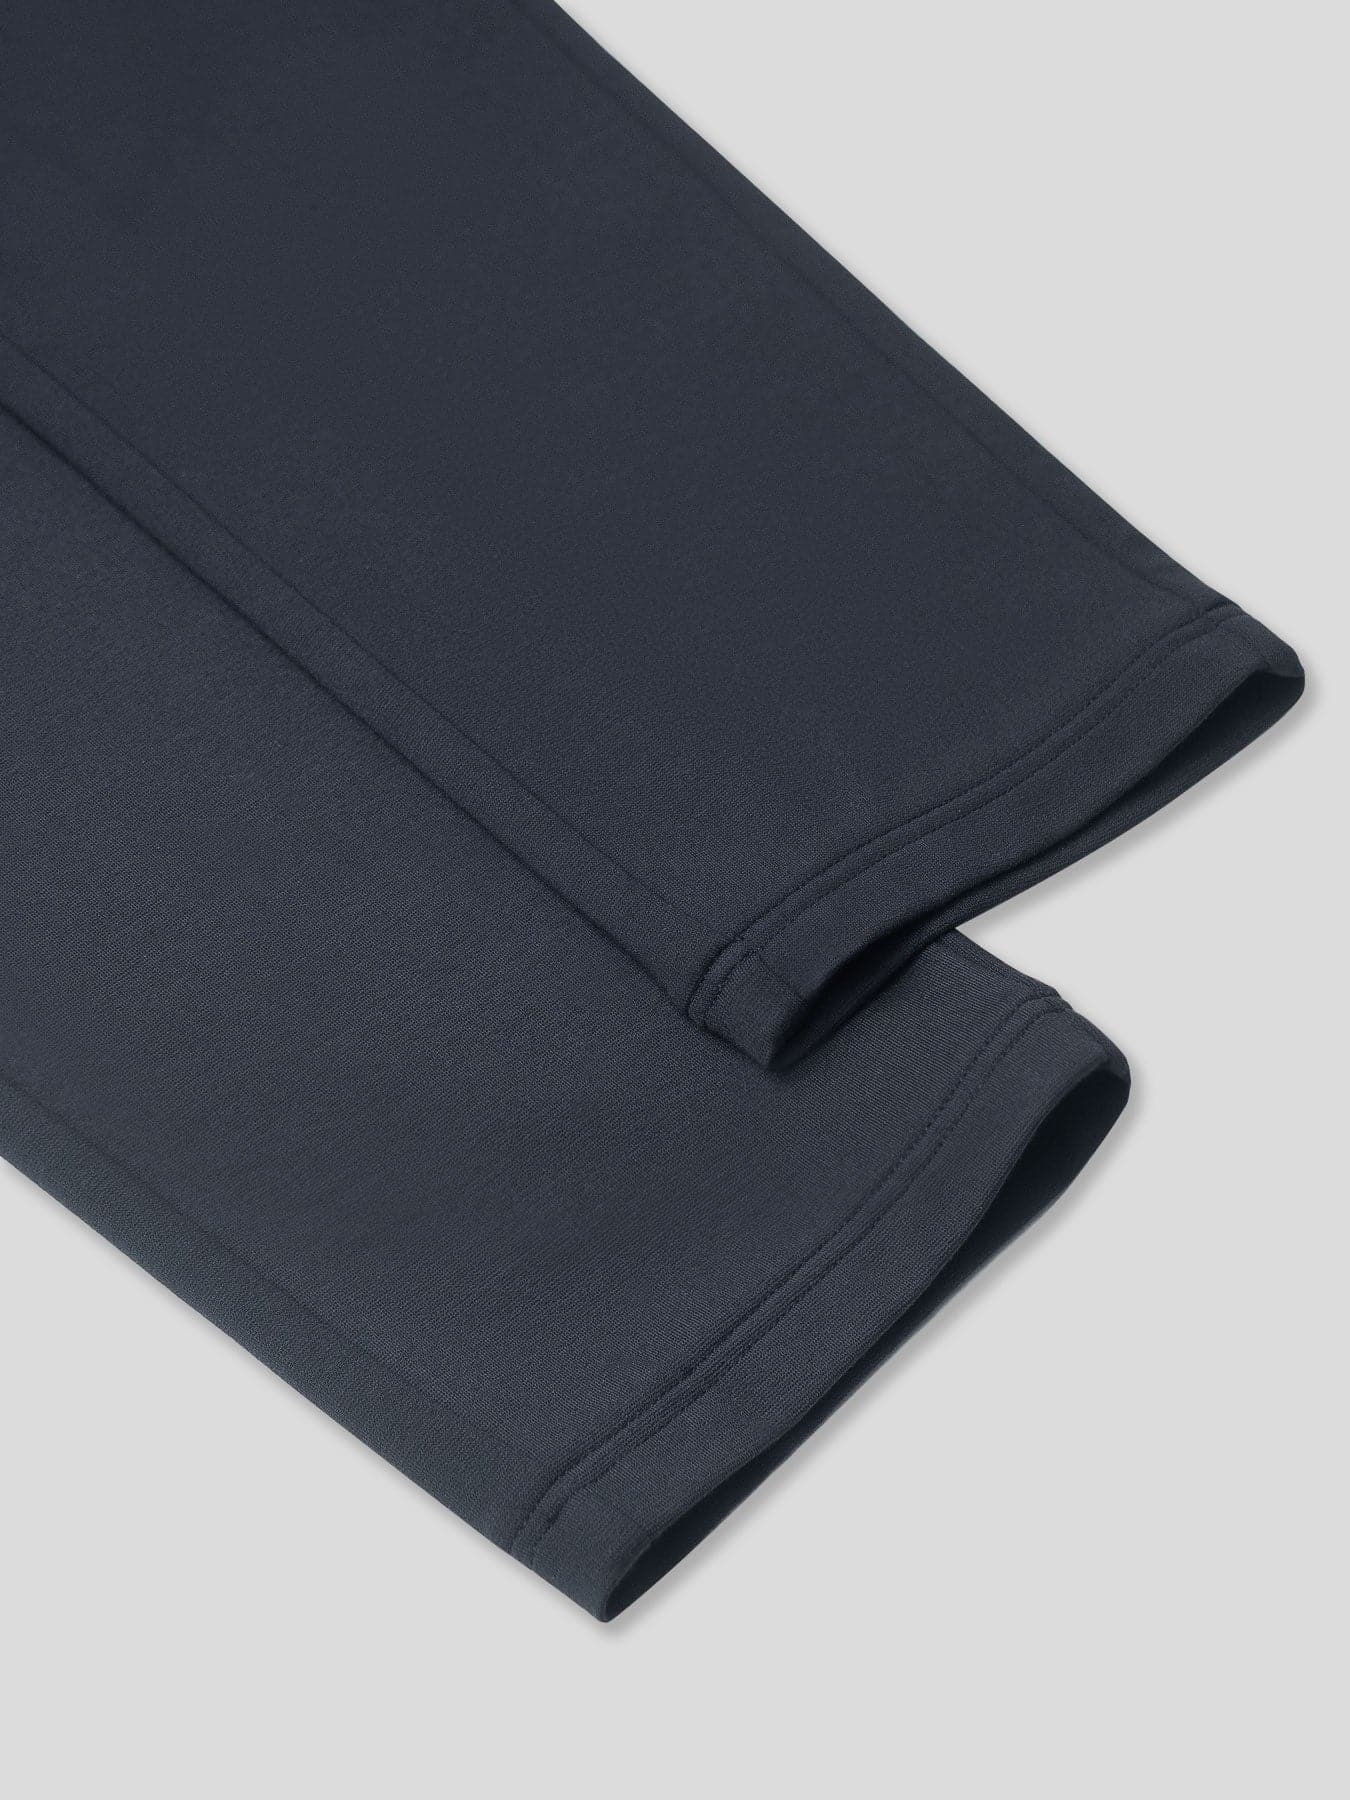 Staingo Tencel™ Stain Resistant Pant